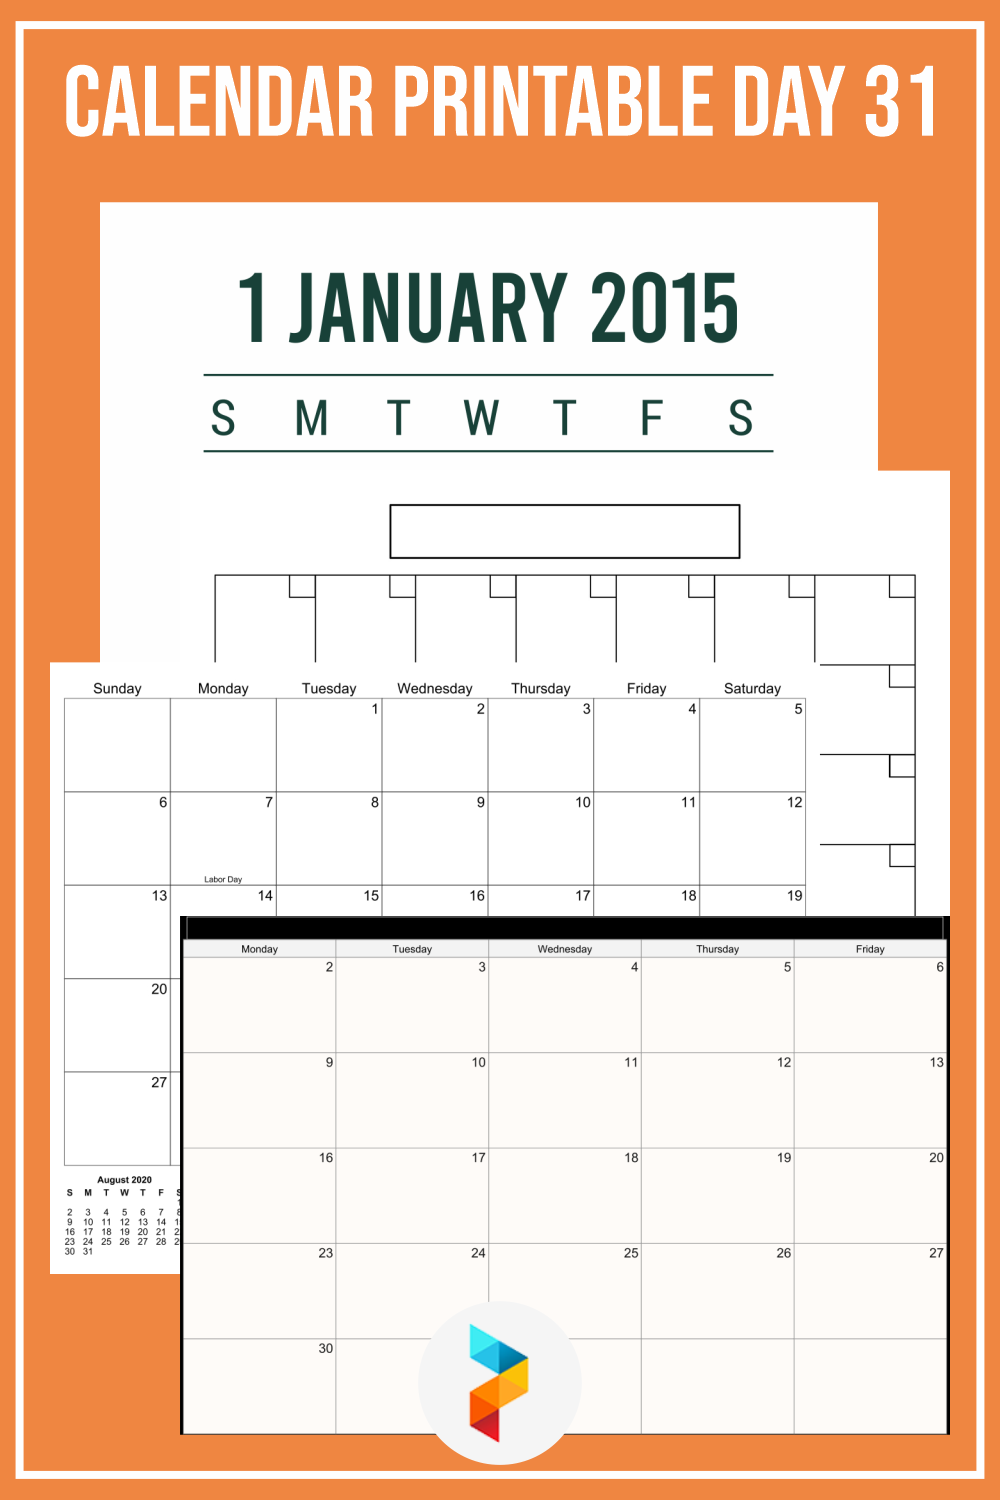 5-best-images-of-calendar-printable-day-31-blank-calendar-grid